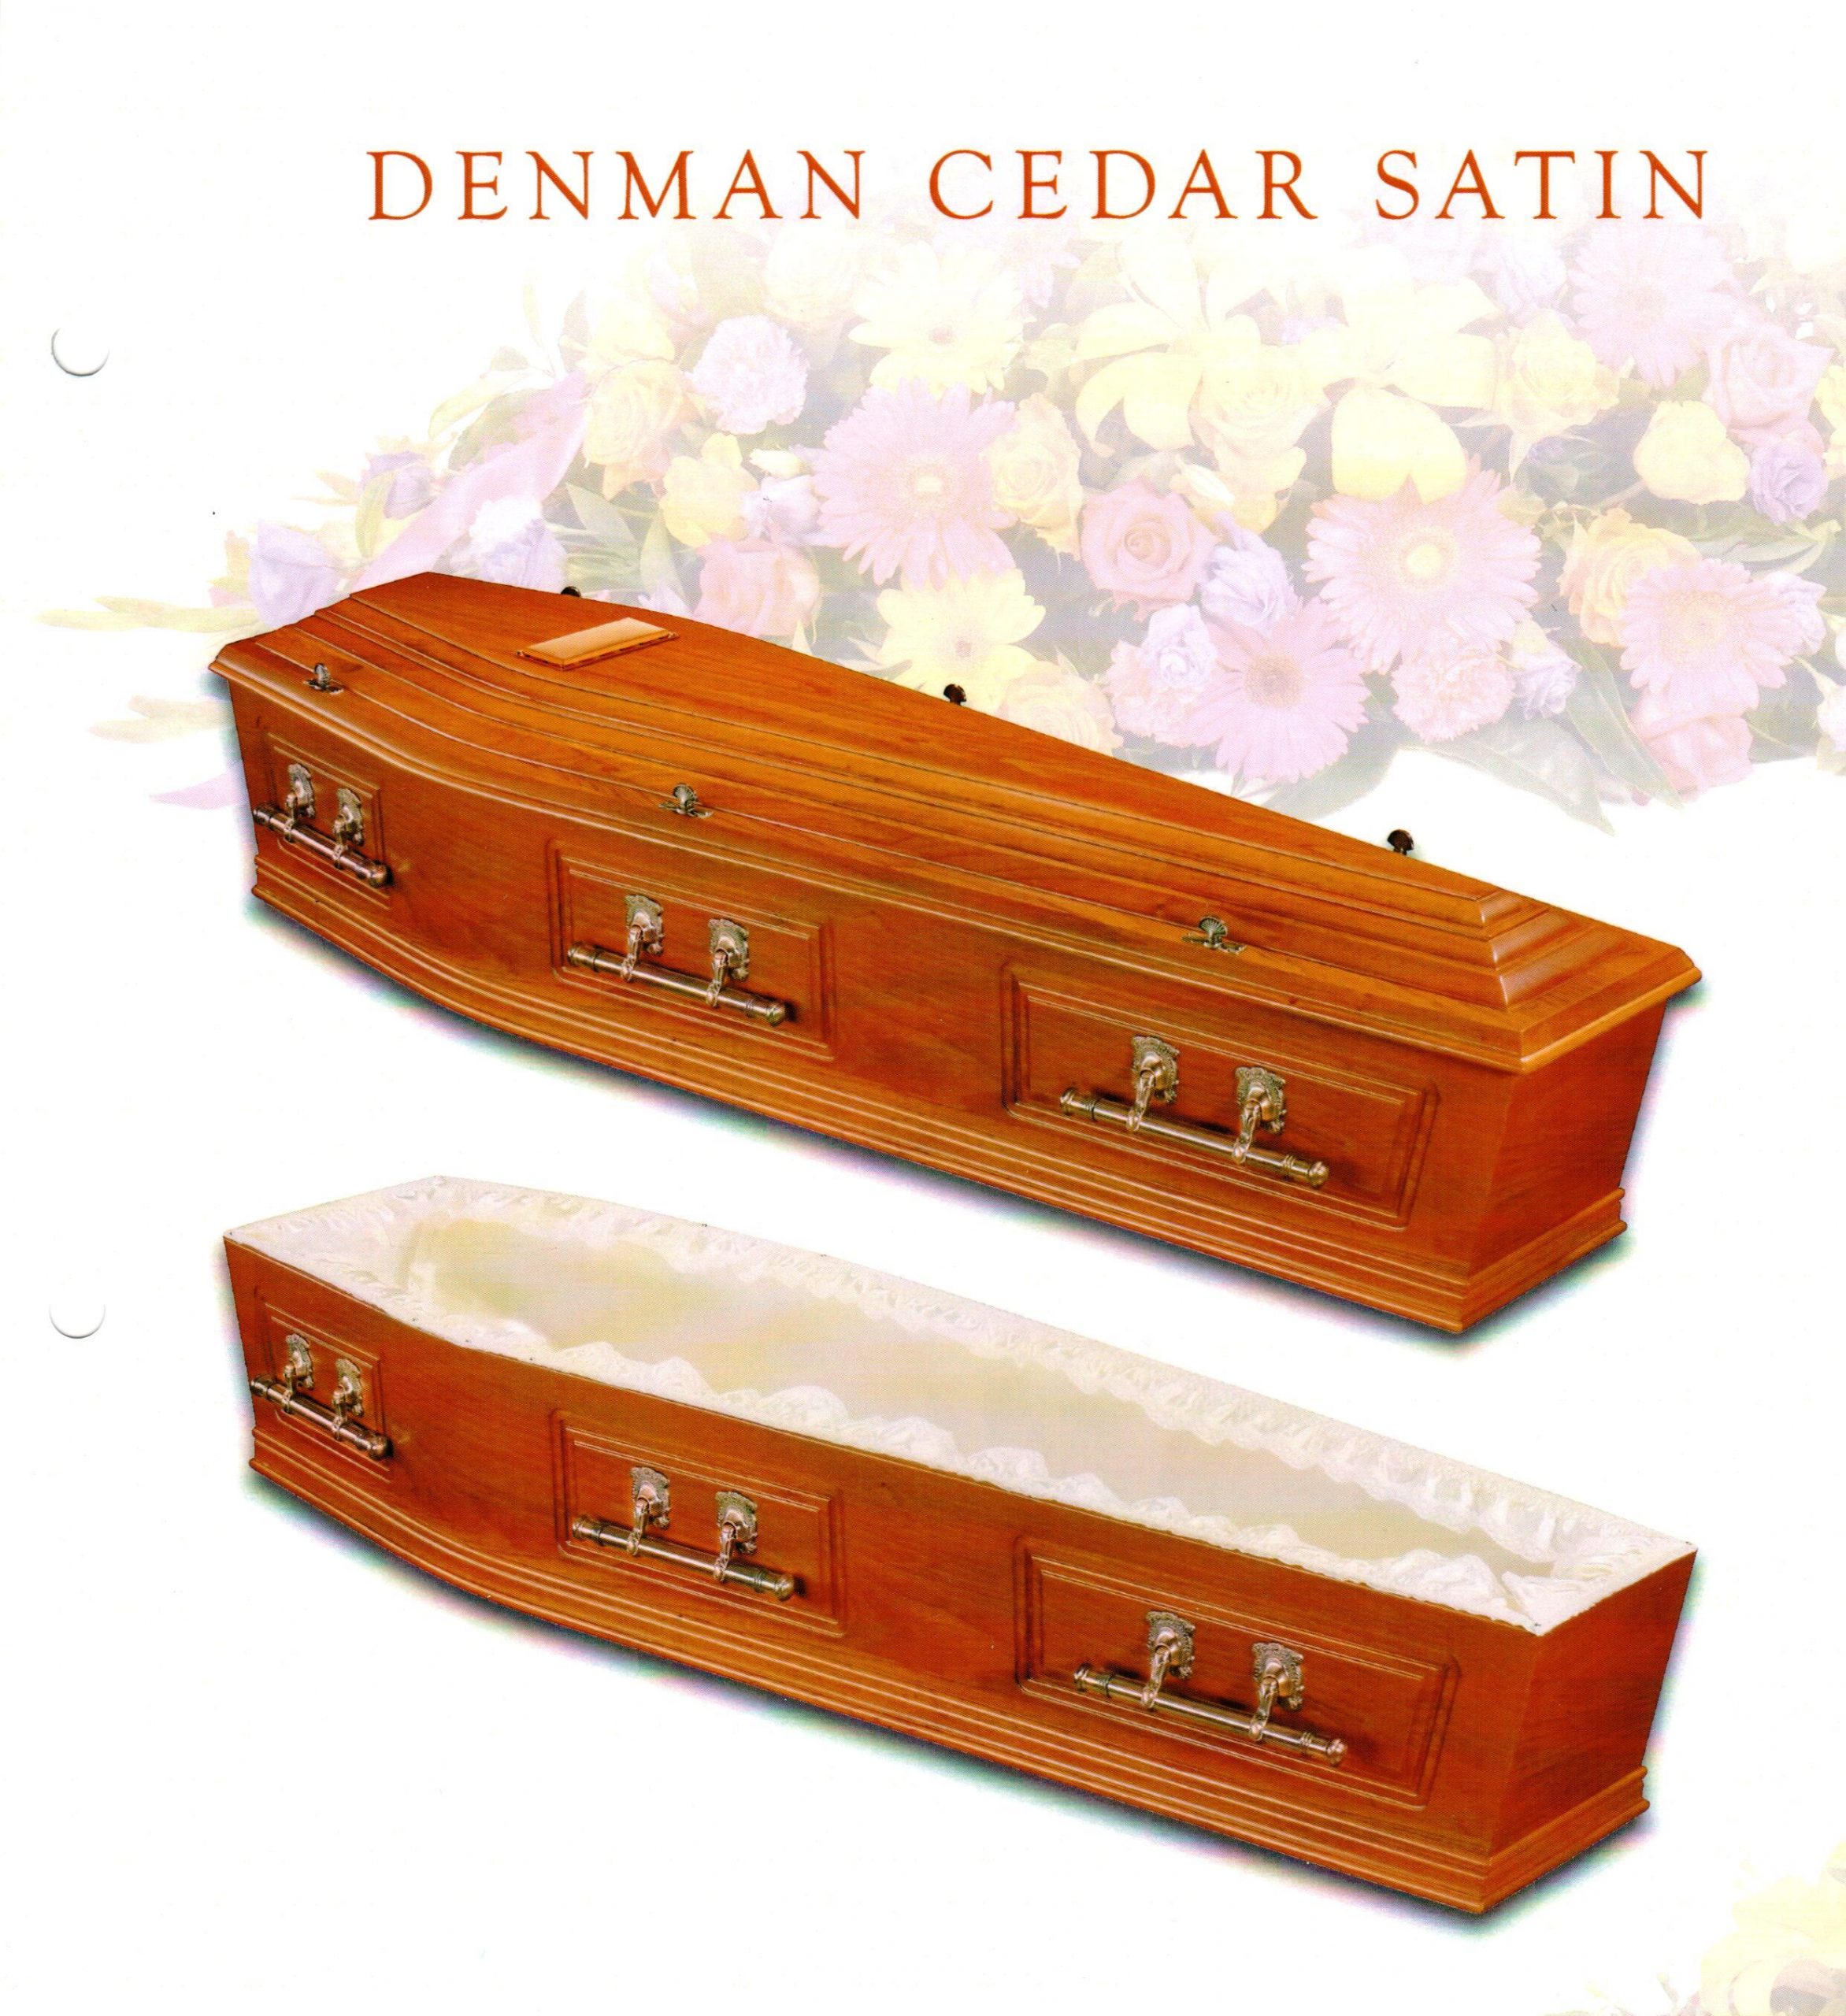 Denman Cedar Satin Coffin